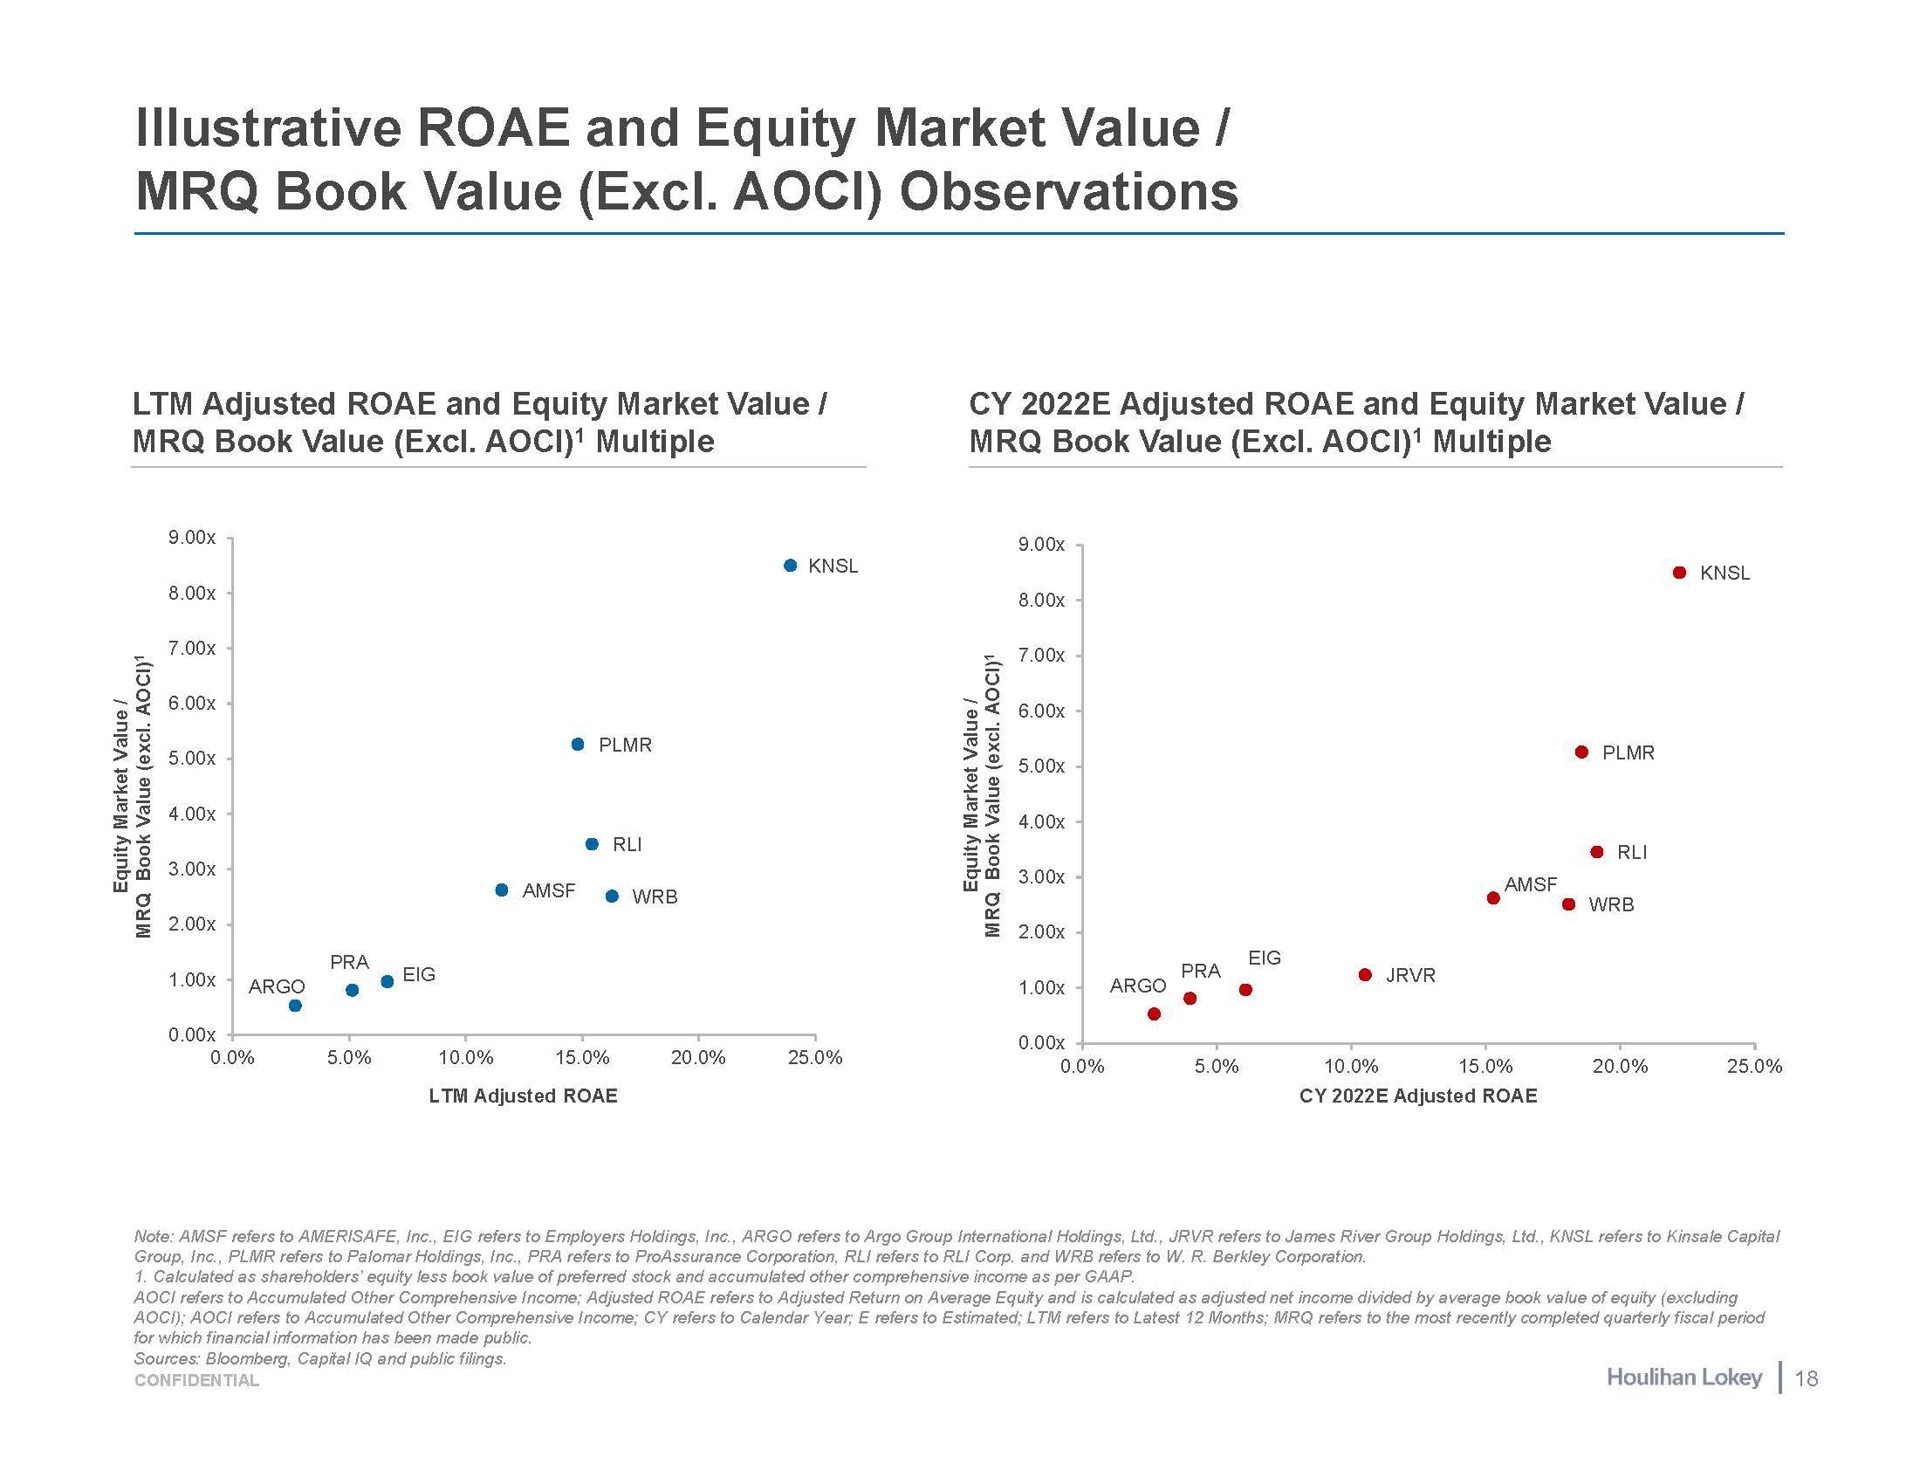 illustrative and equity market value book value observations | Houlihan Lokey